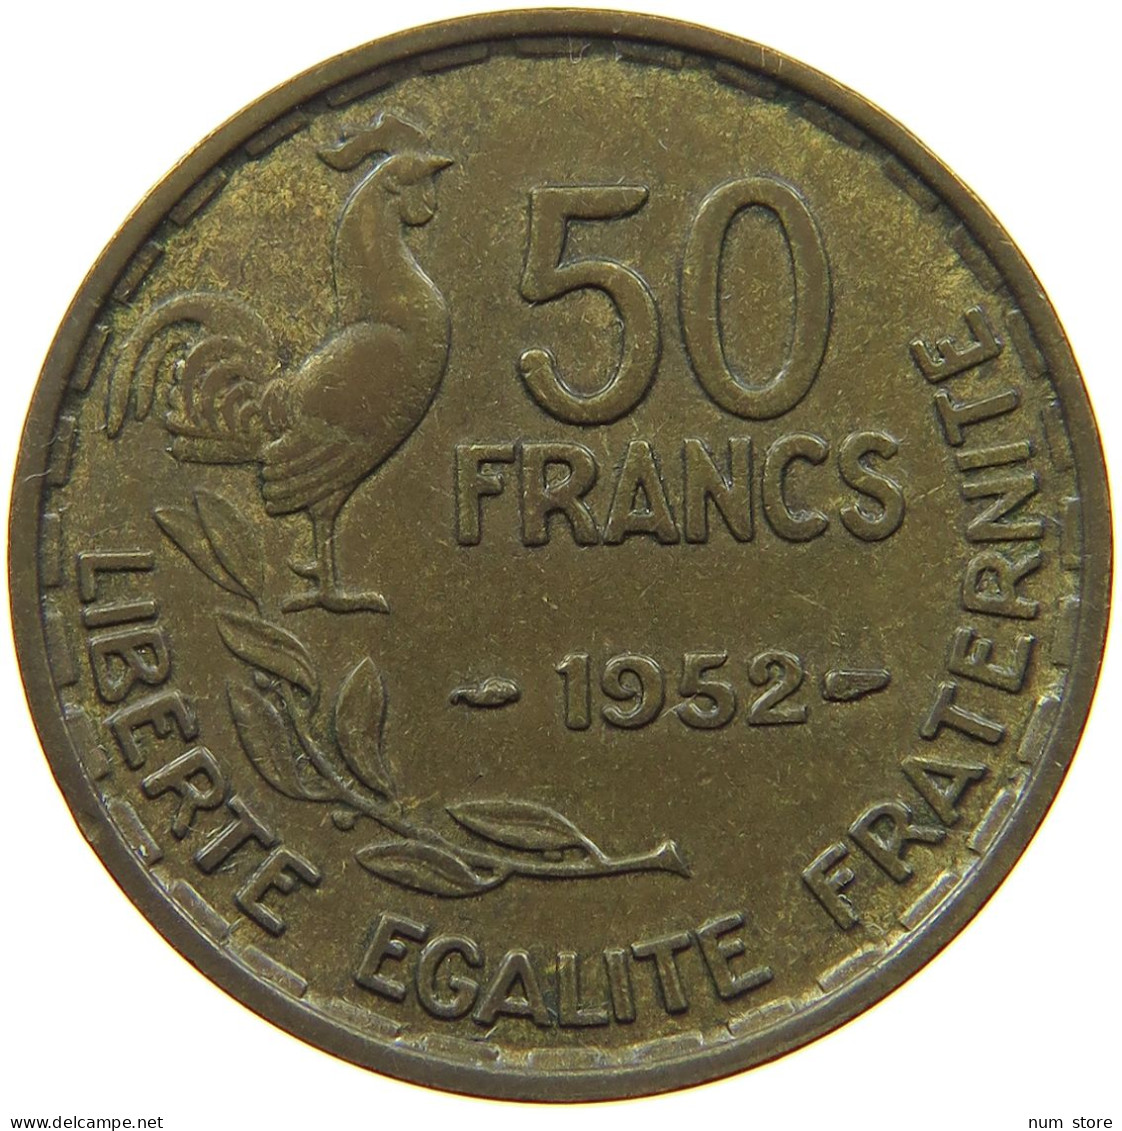 FRANCE 50 FRANCS 1952 #s066 0219 - 50 Francs